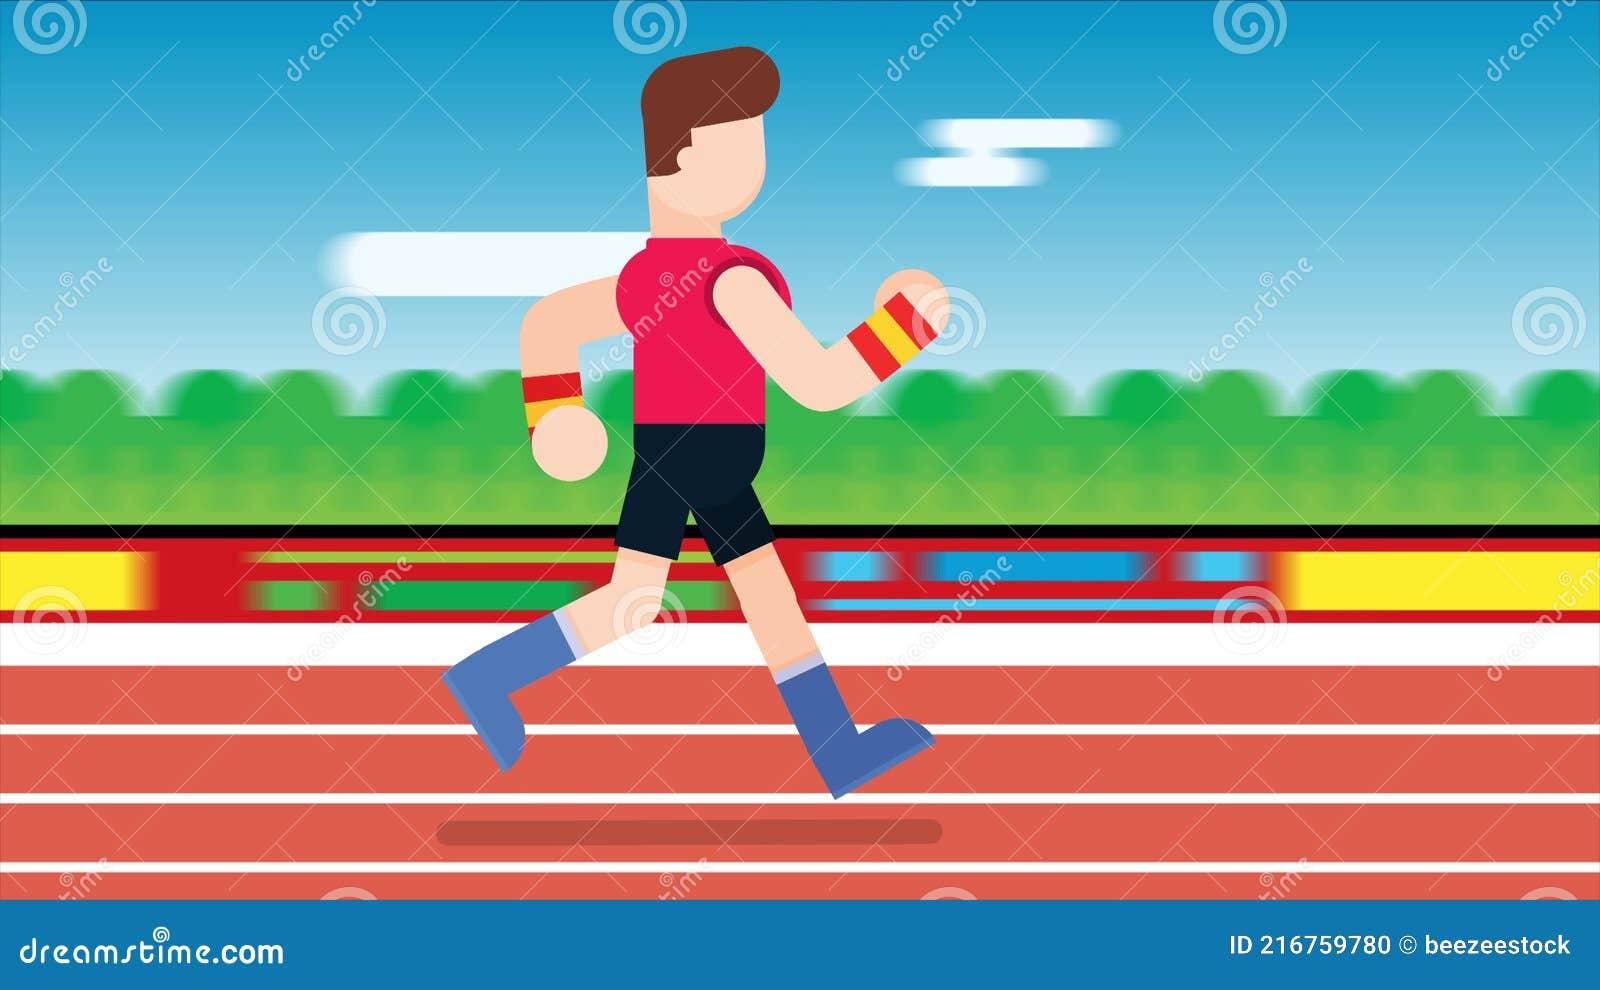 Runner Athlete Running on Running Track. Stock Footage - Video of actions,  cartoon: 216759780